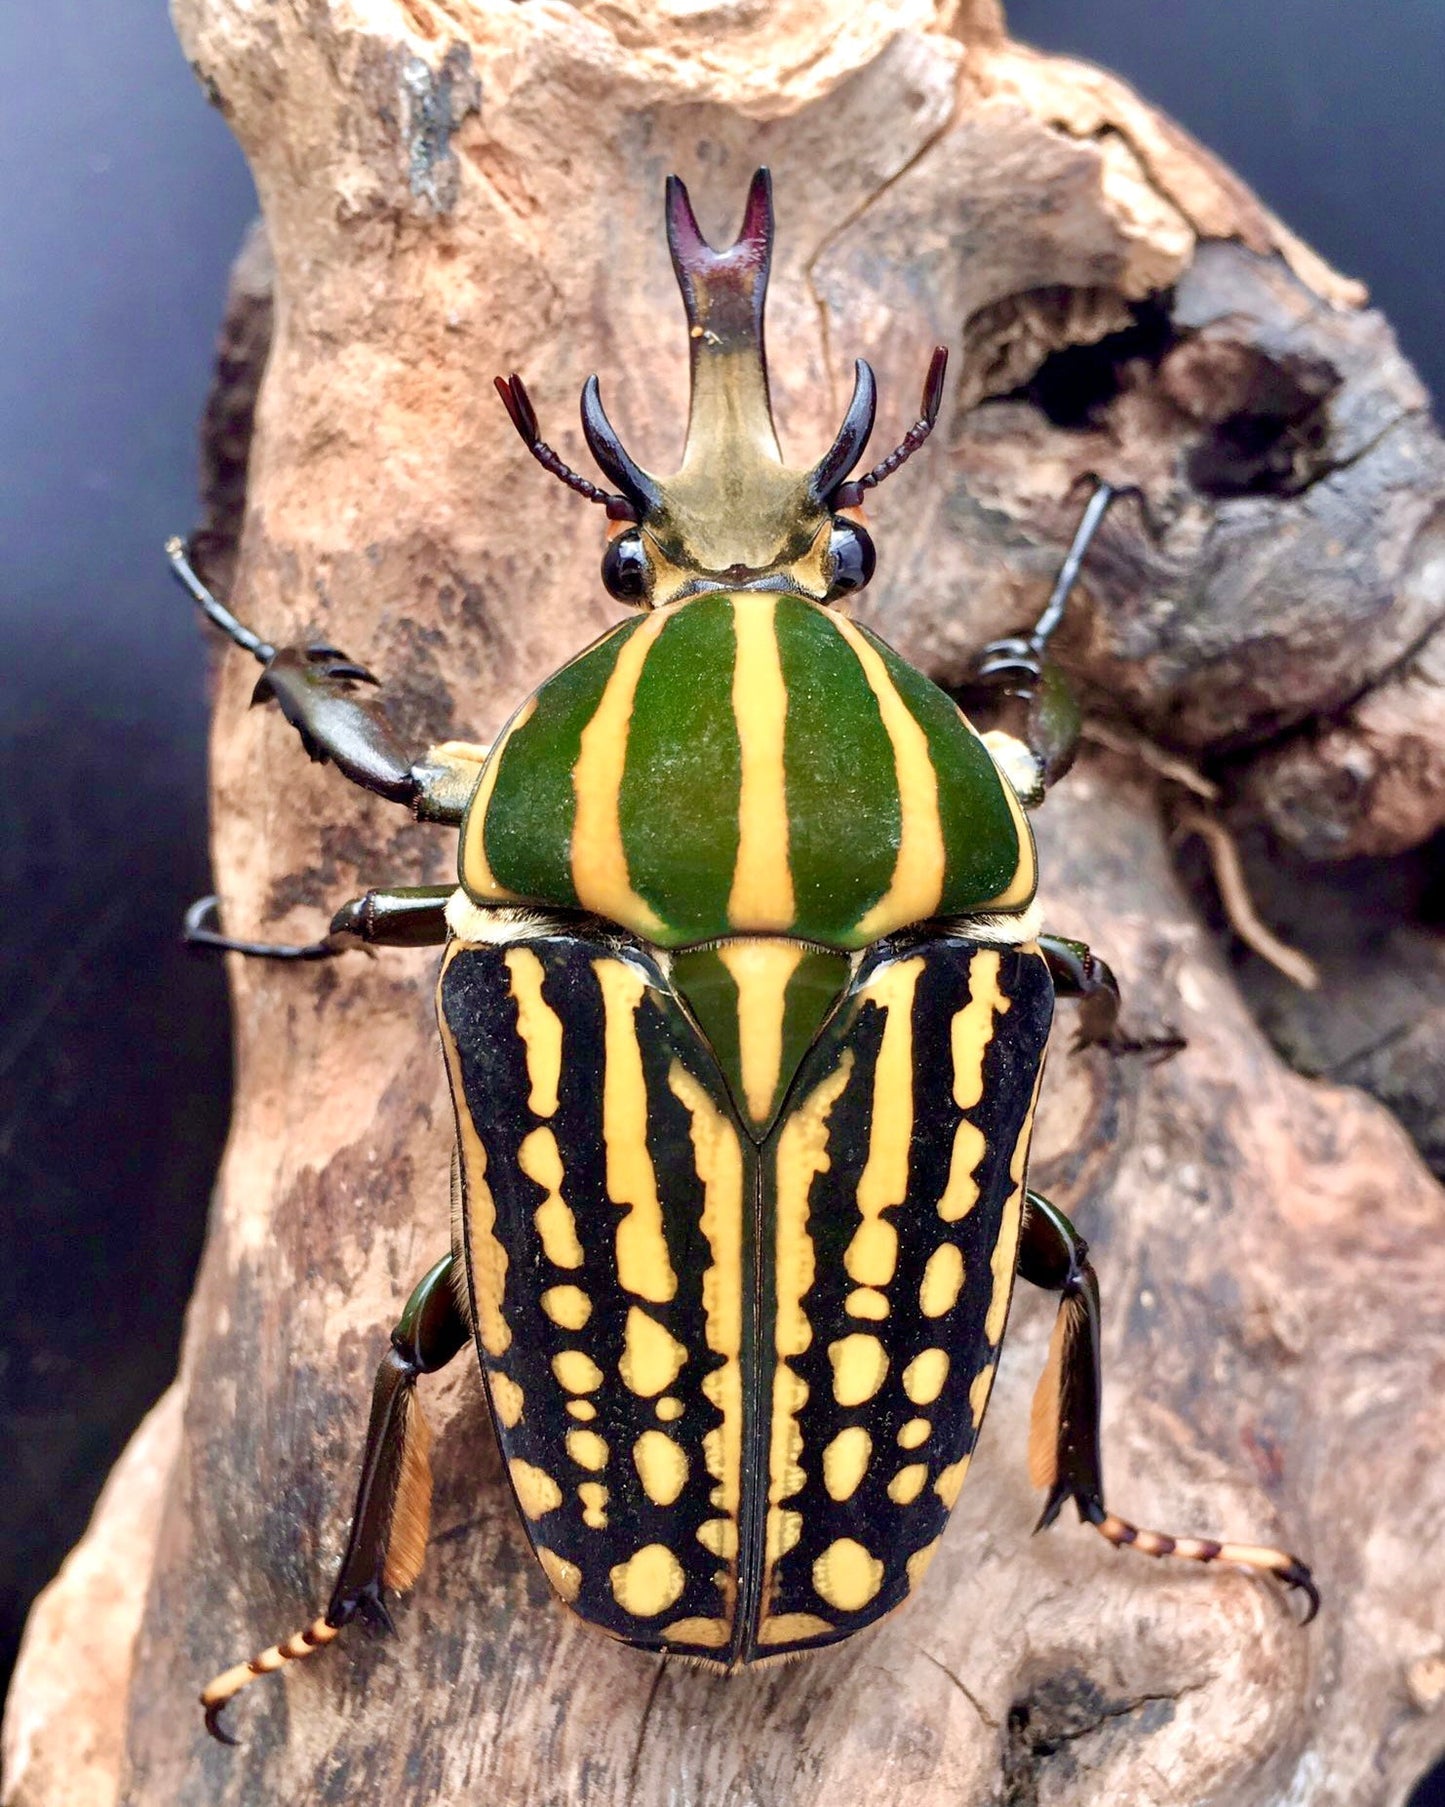 ADULTS - Giant Flower Beetle, (Mecynorrina savagei) - Richard’s Inverts